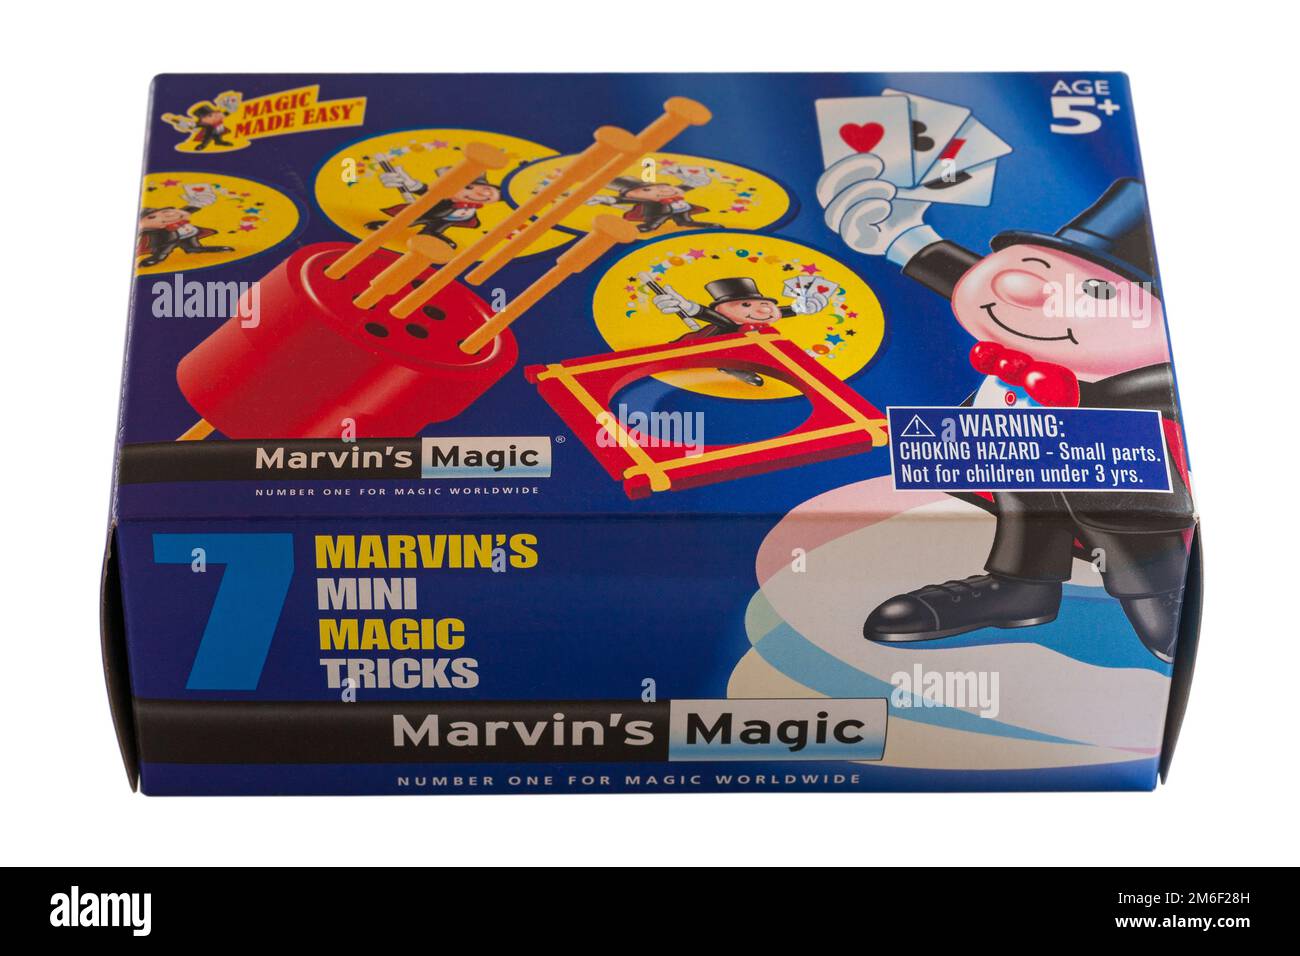 Magia de Marvins - 7 mini trucos de magia de Marvin para la edad 5+ en caja aislada sobre fondo blanco Foto de stock